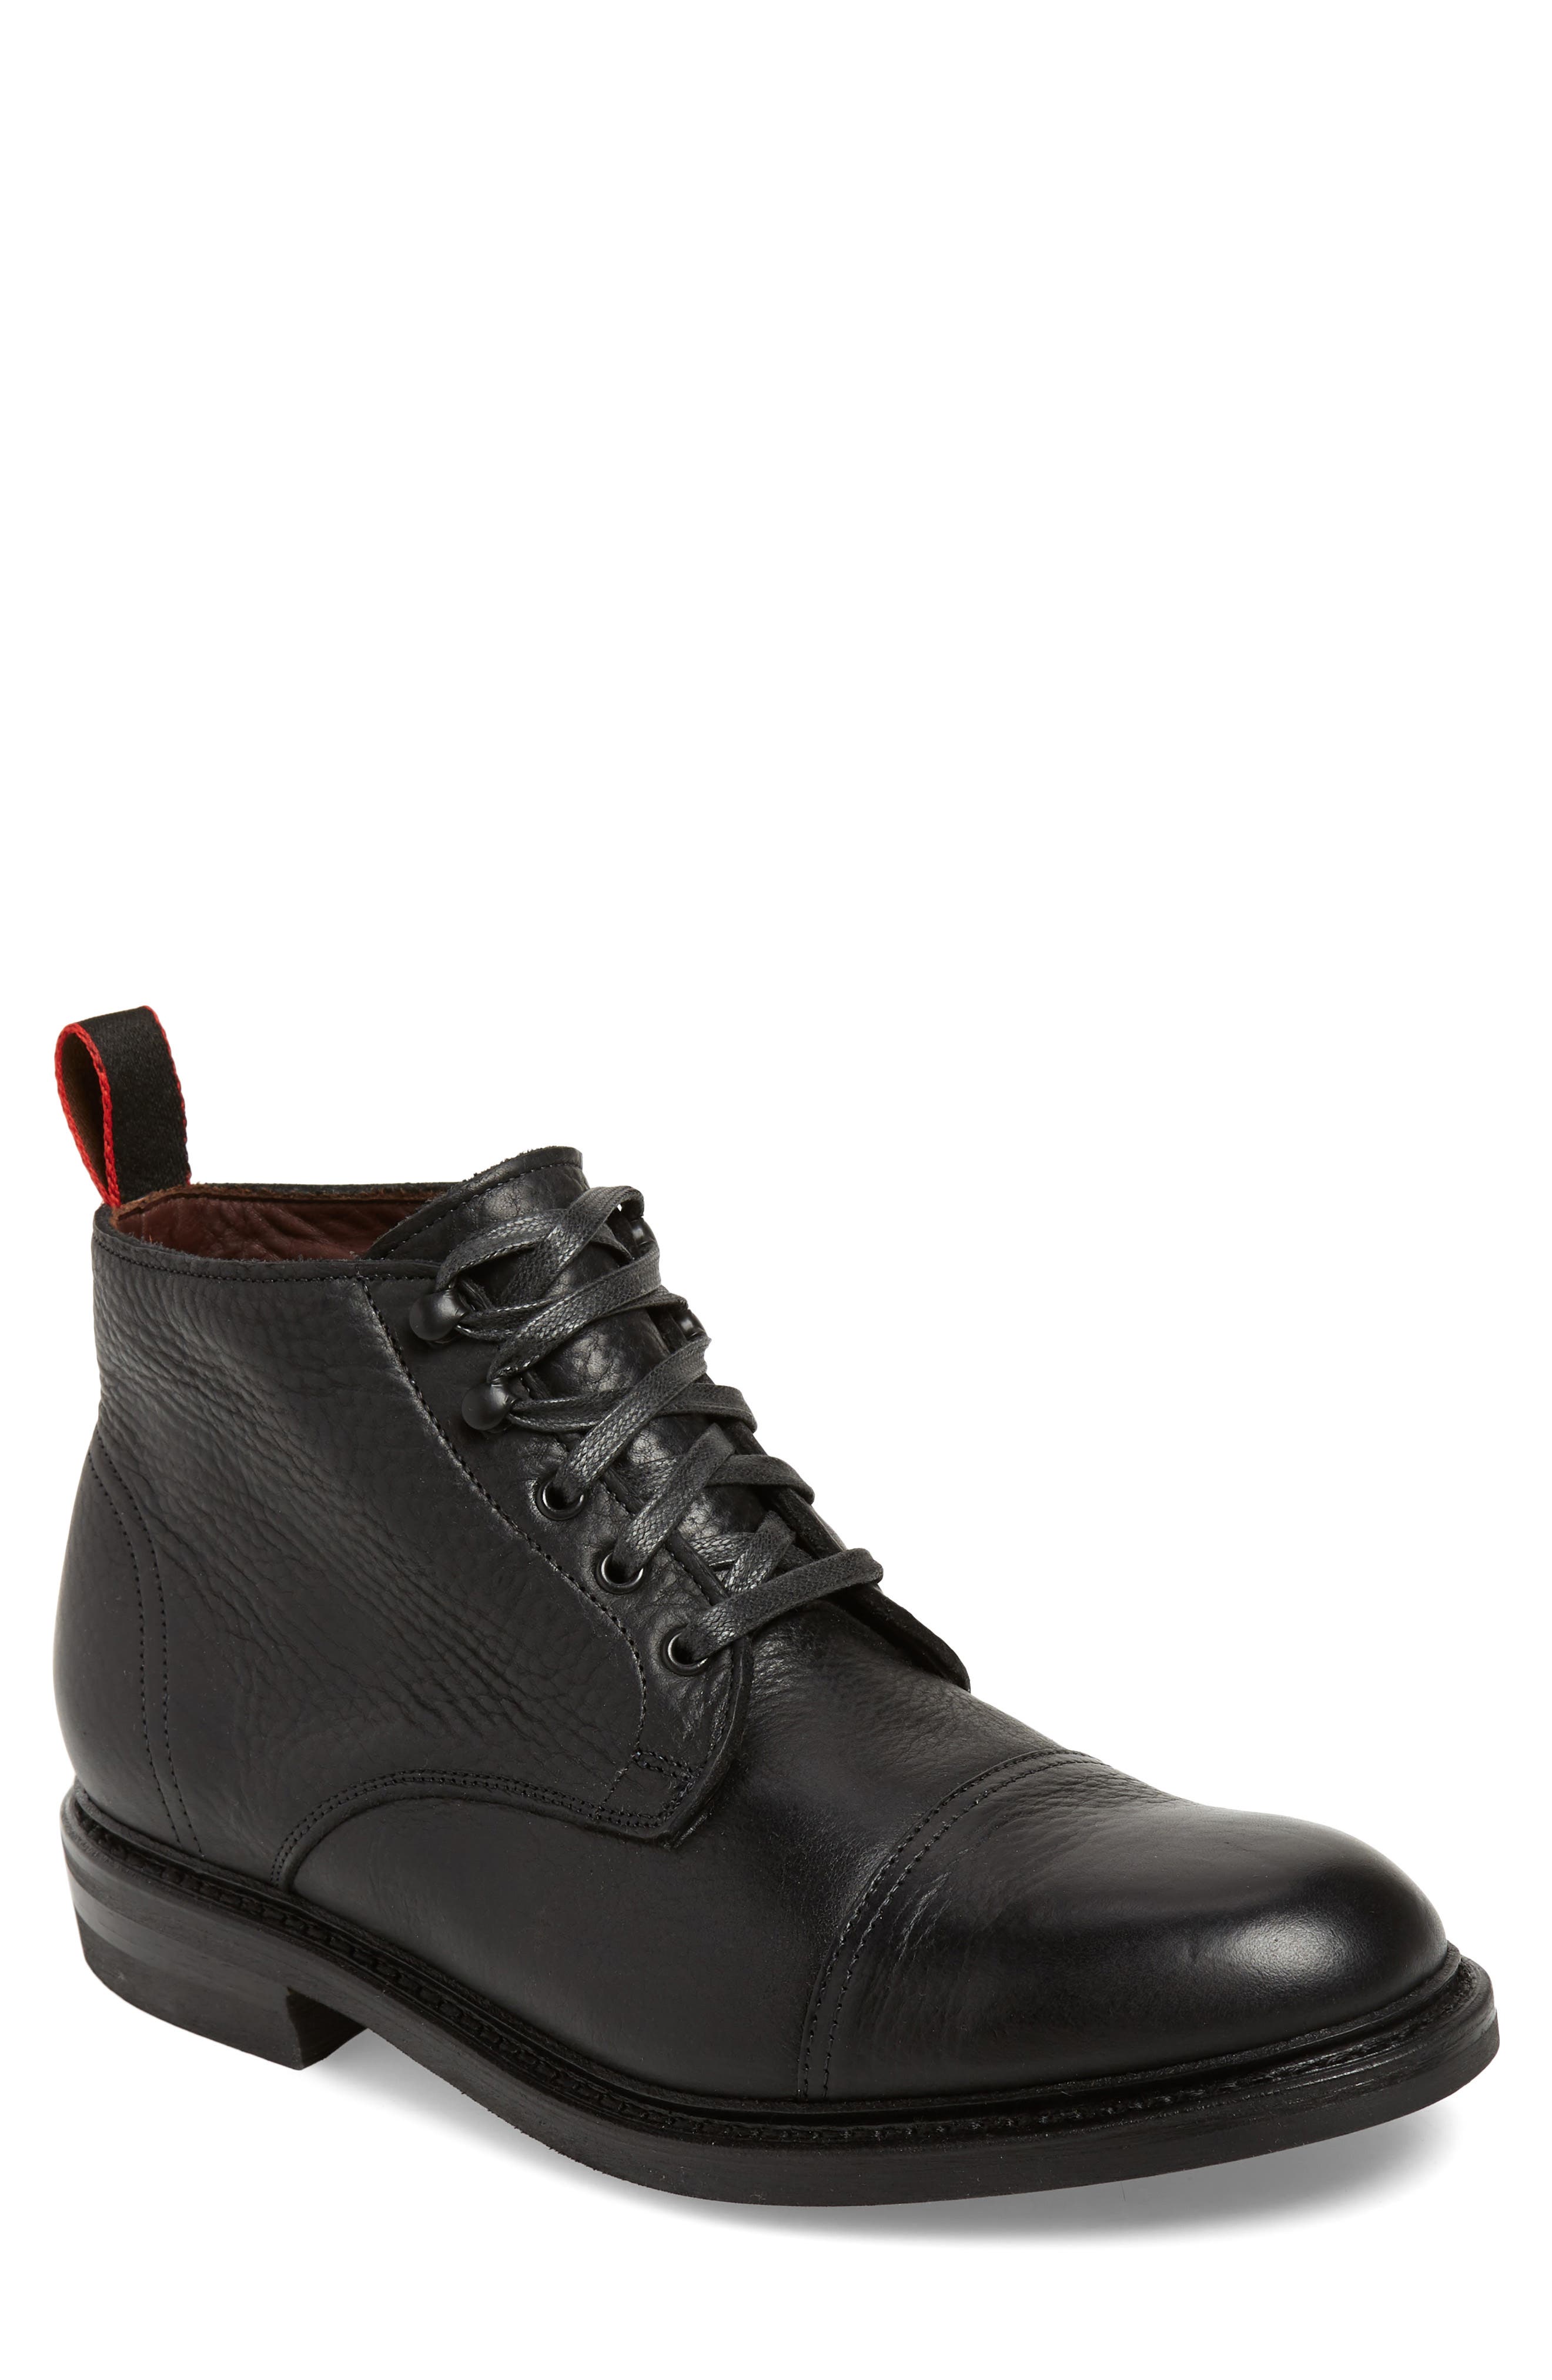 frye black chelsea boots